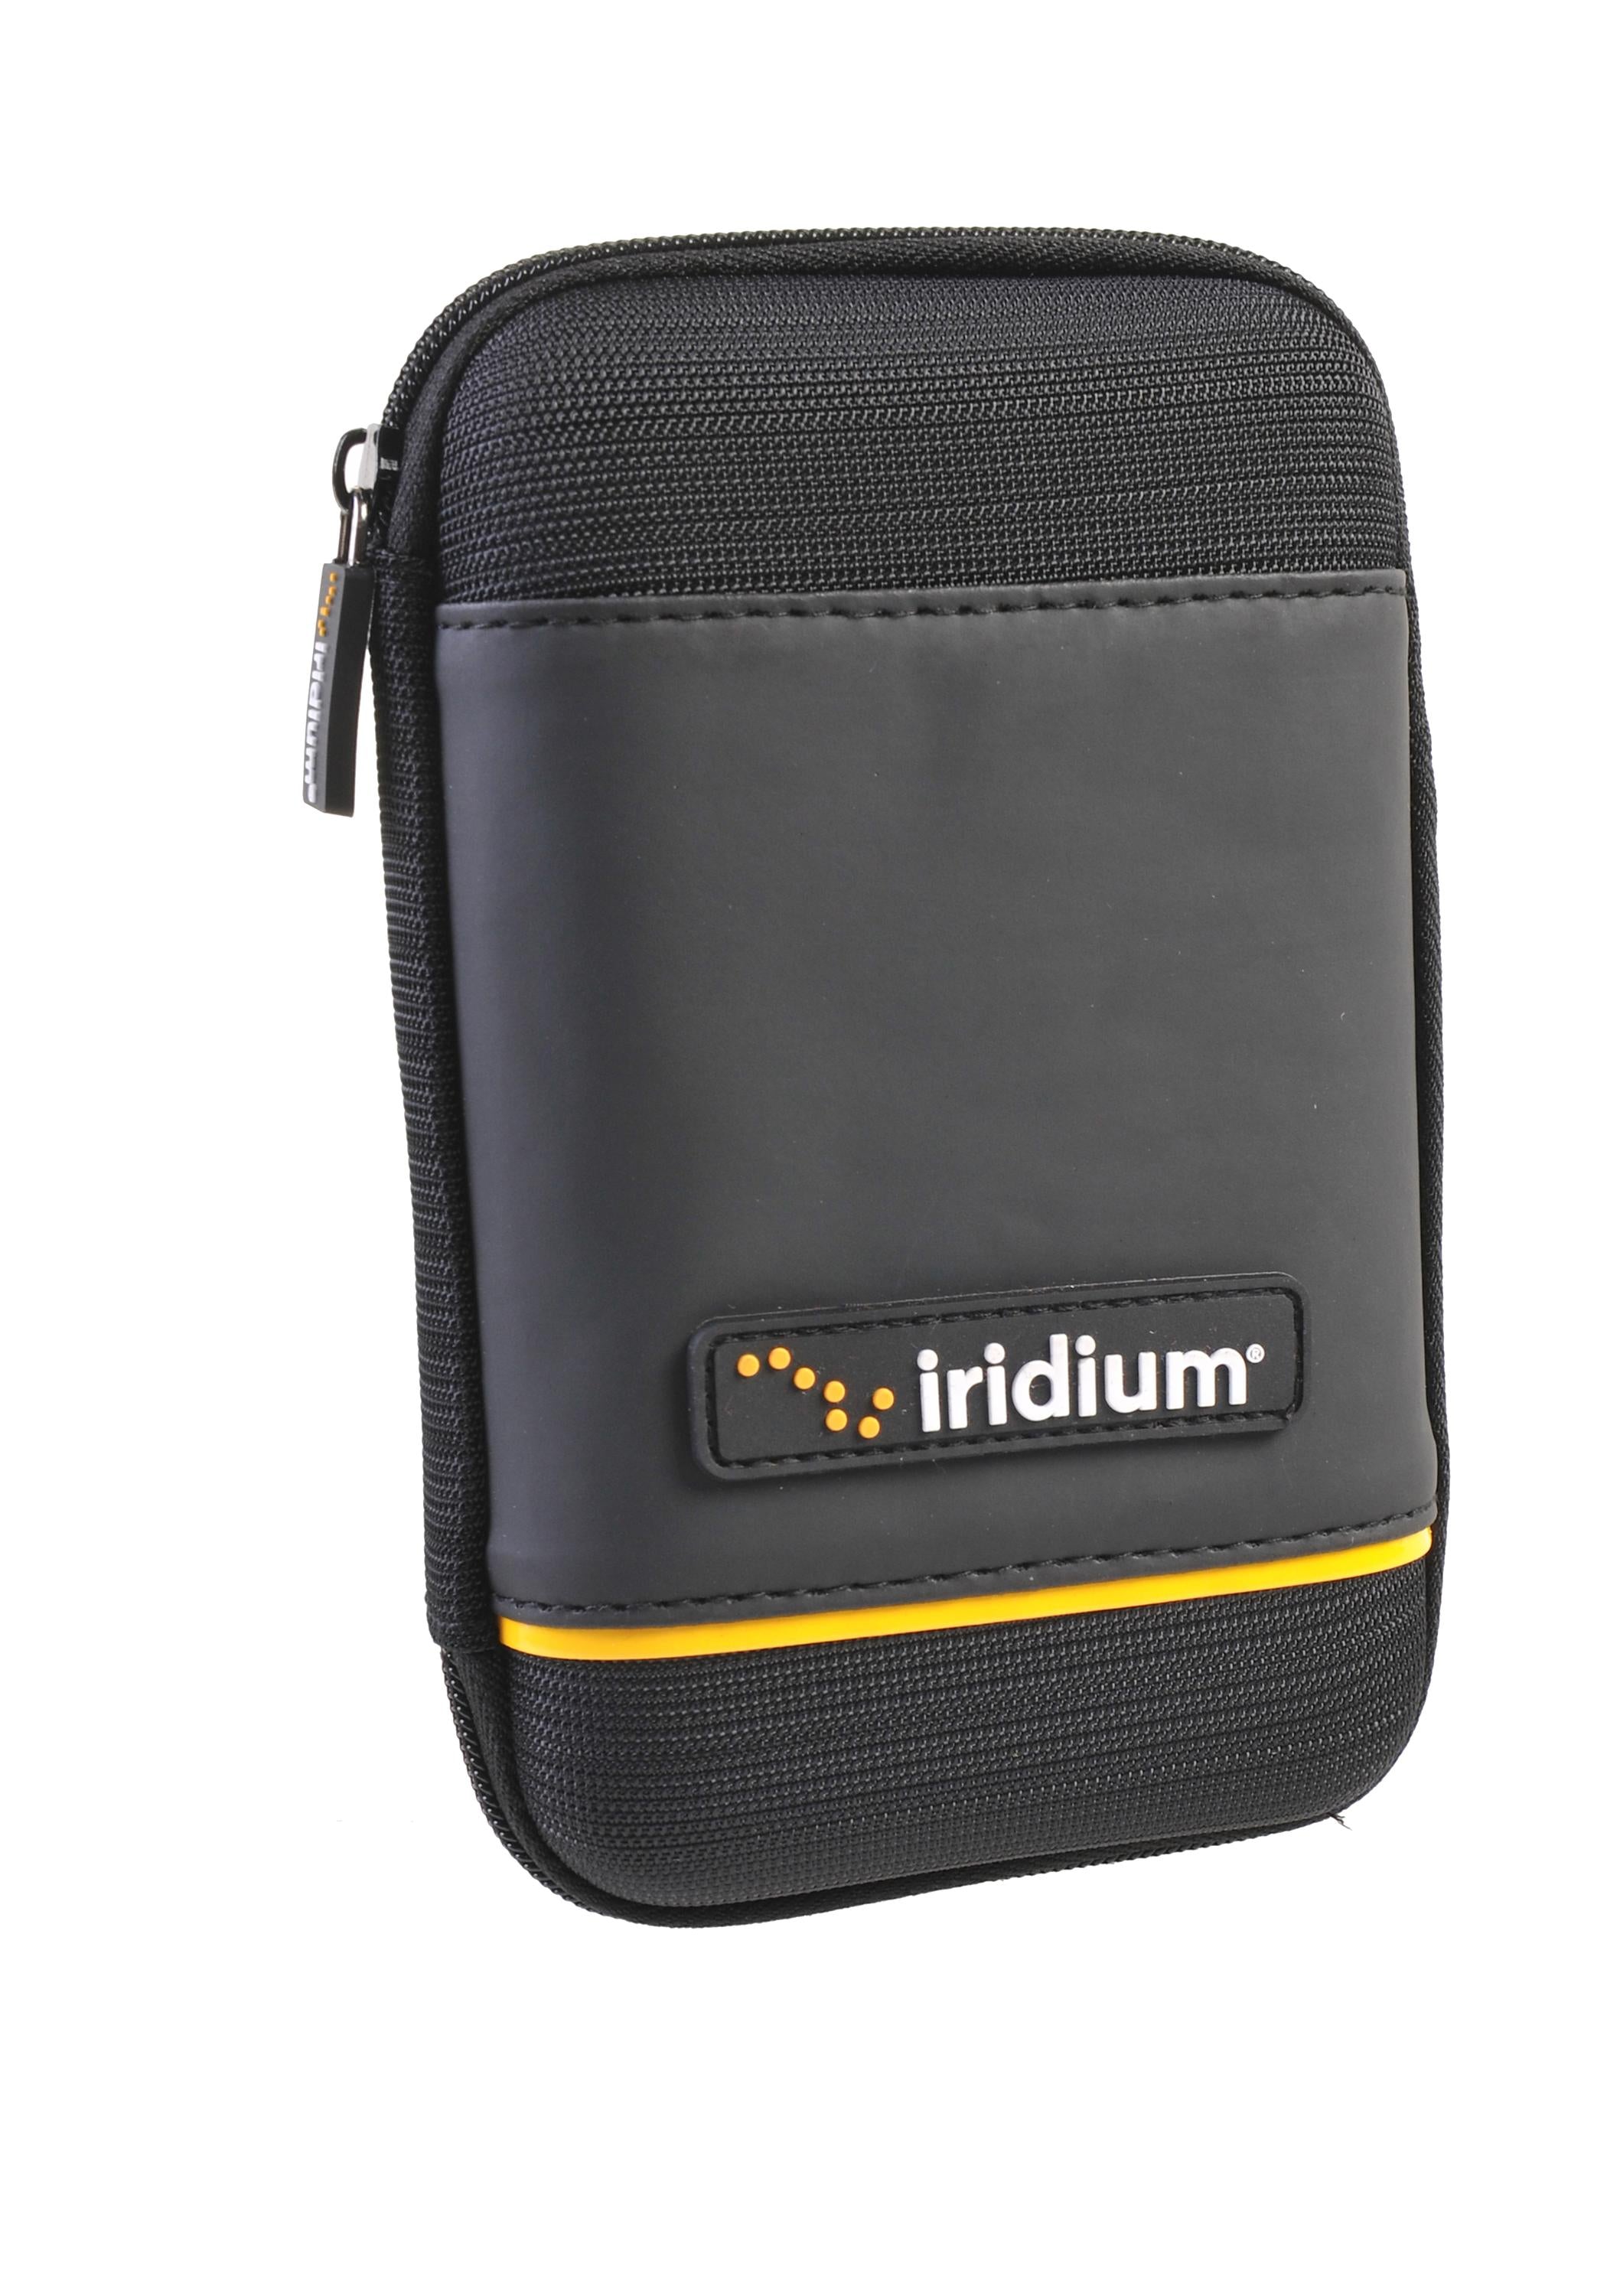 Carry Bag for the Iridium GO! Satellite Wi-Fi Hotspot